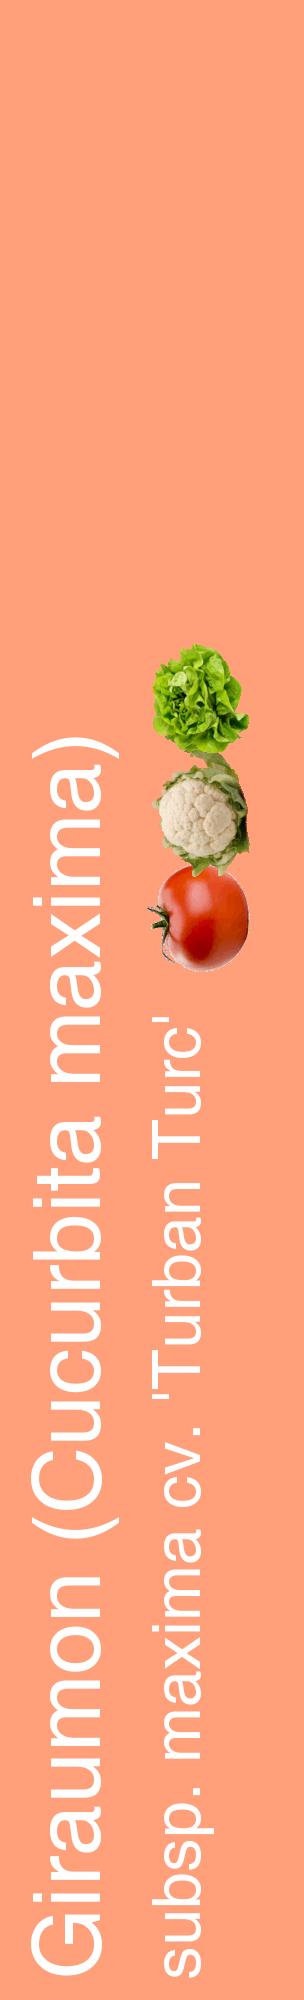 Étiquette de : Cucurbita maxima subsp. maxima cv. 'Turban Turc' - format c - style blanche39_basiquehel avec comestibilité simplifiée